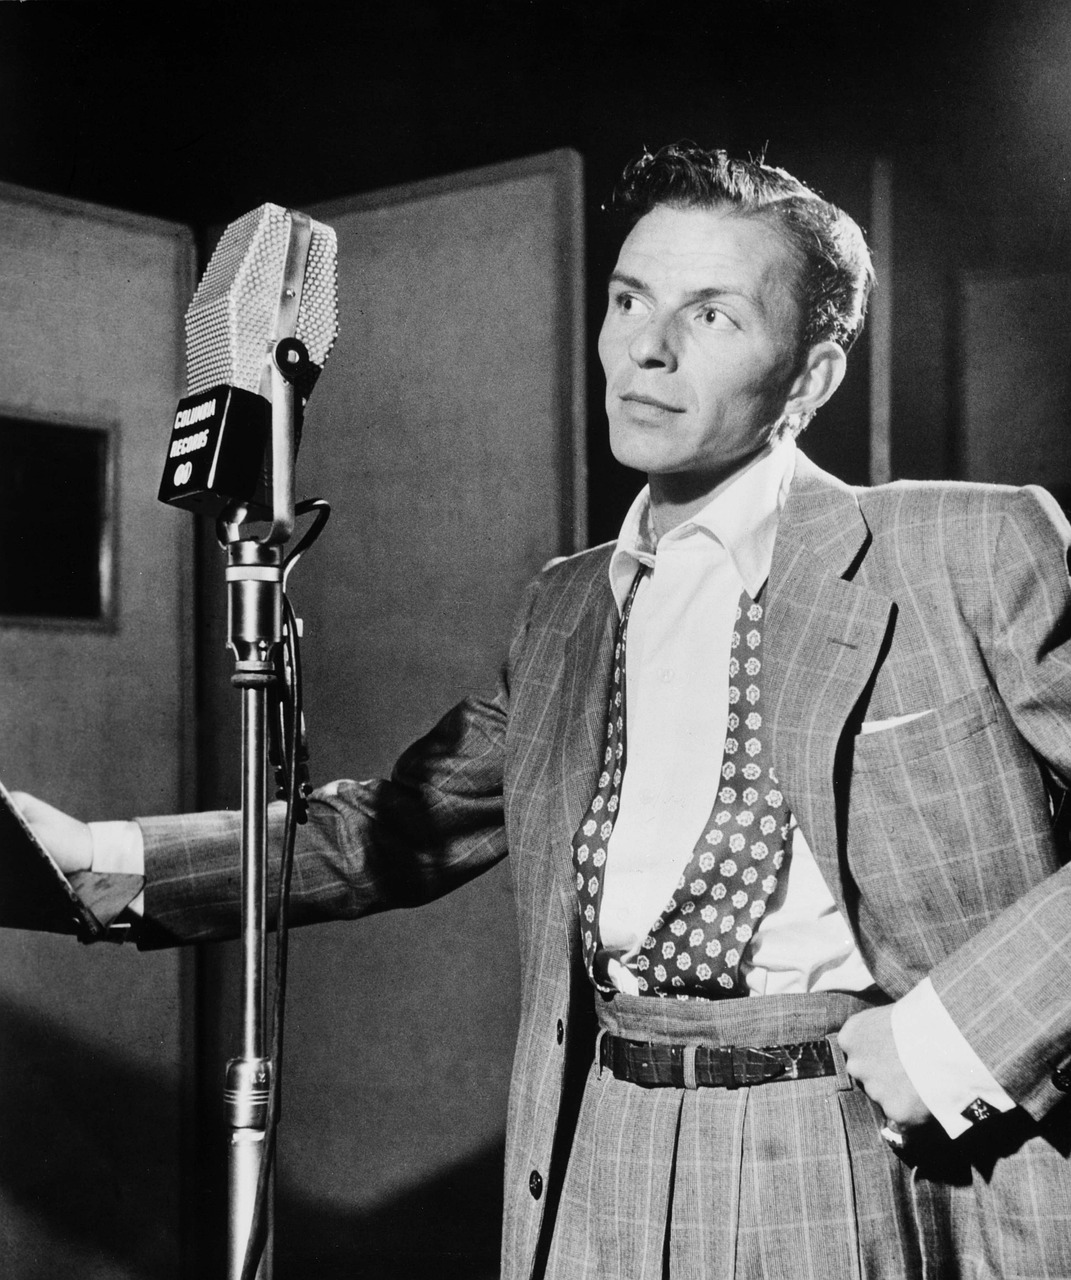 Poet Frank Sinatra